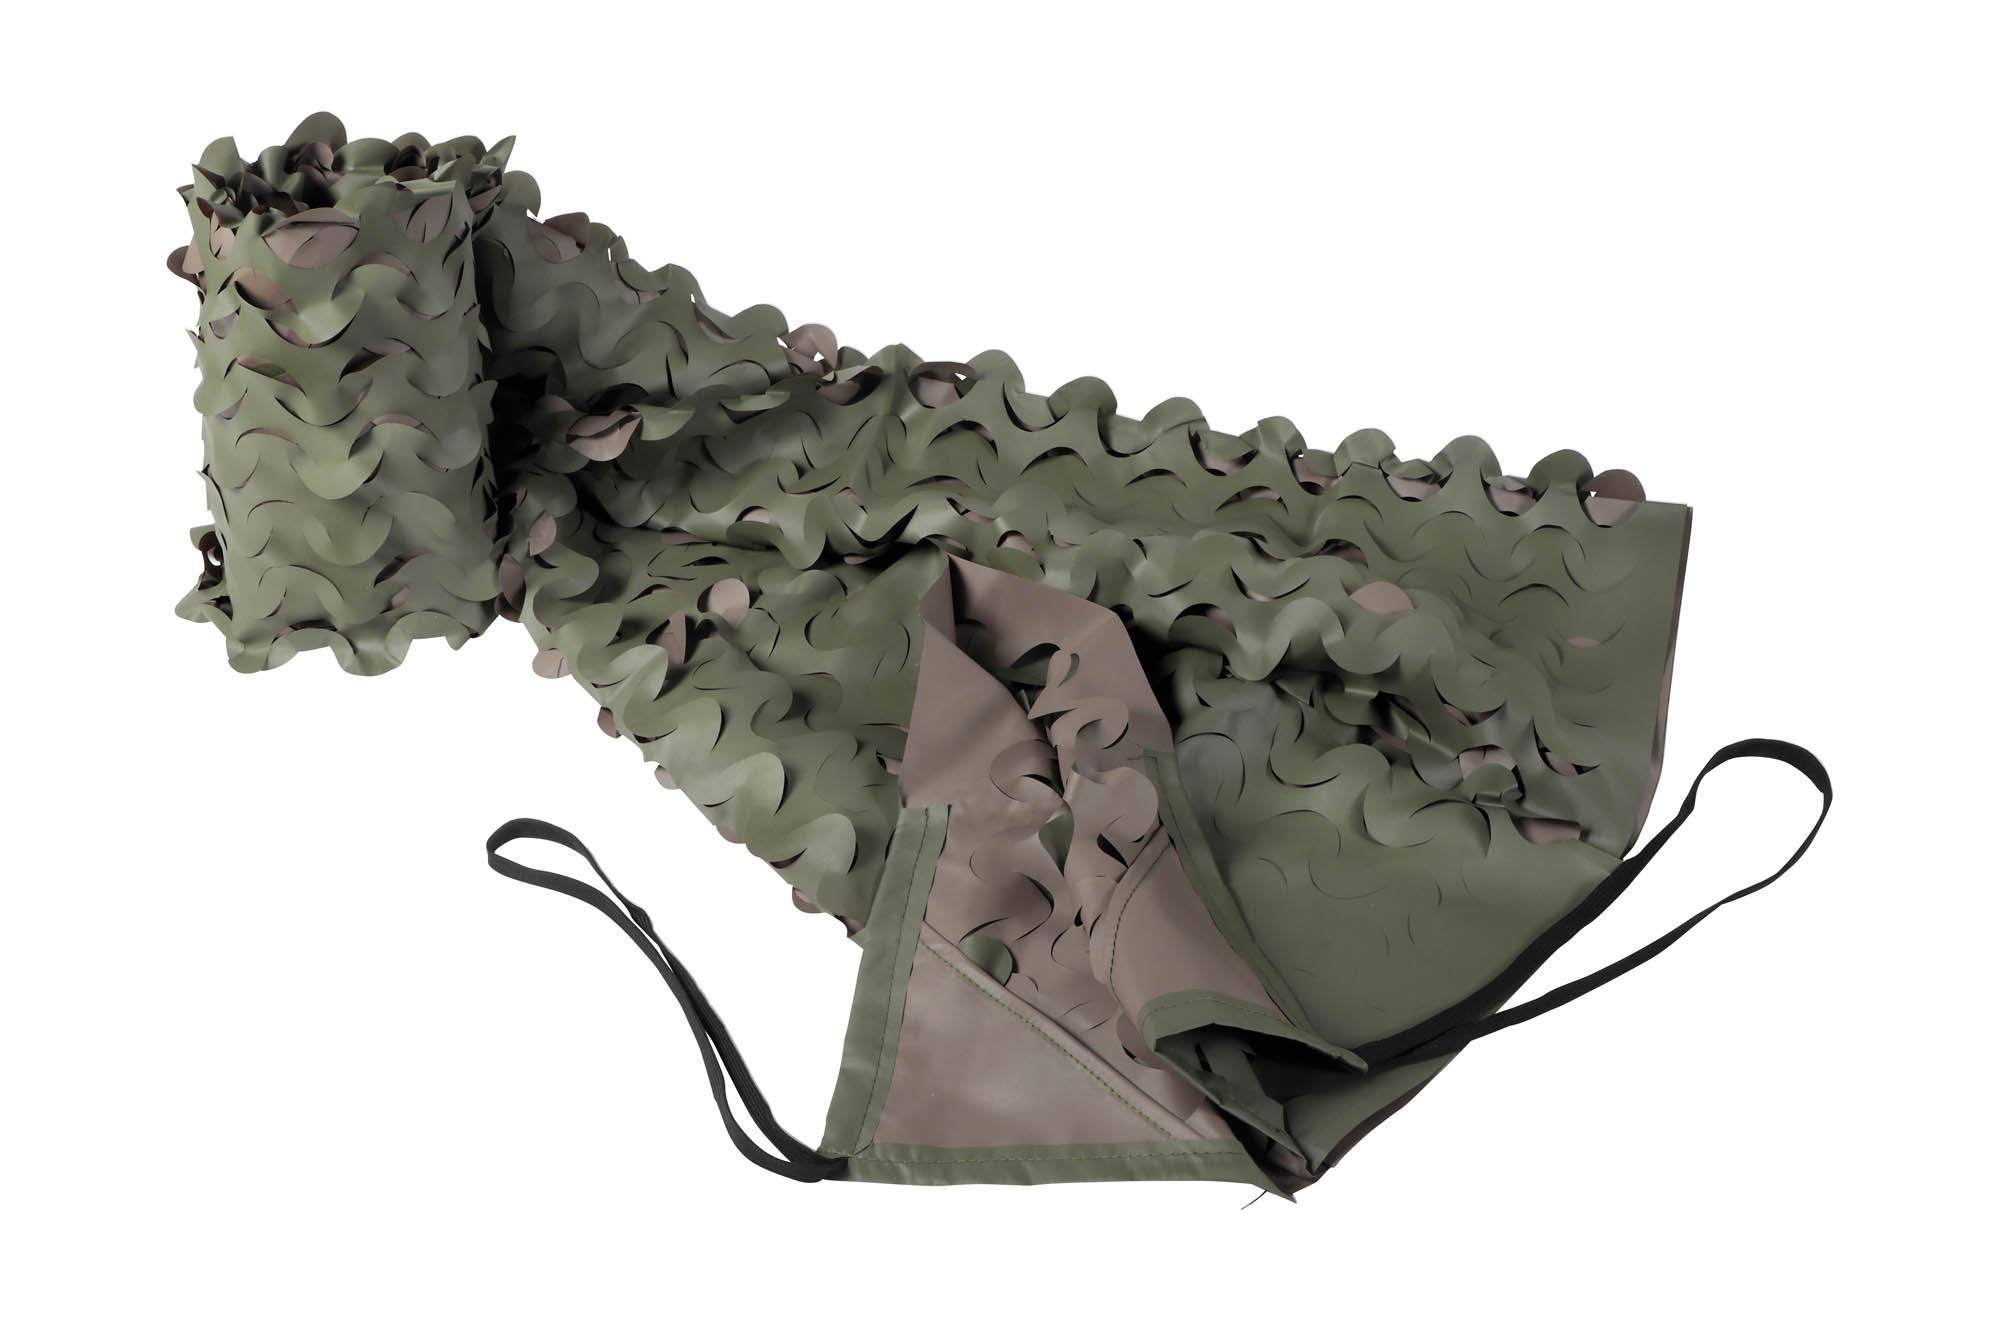 Filet de camouflage Stepland réversible Kaki / Marron - 1,50 x 3 m